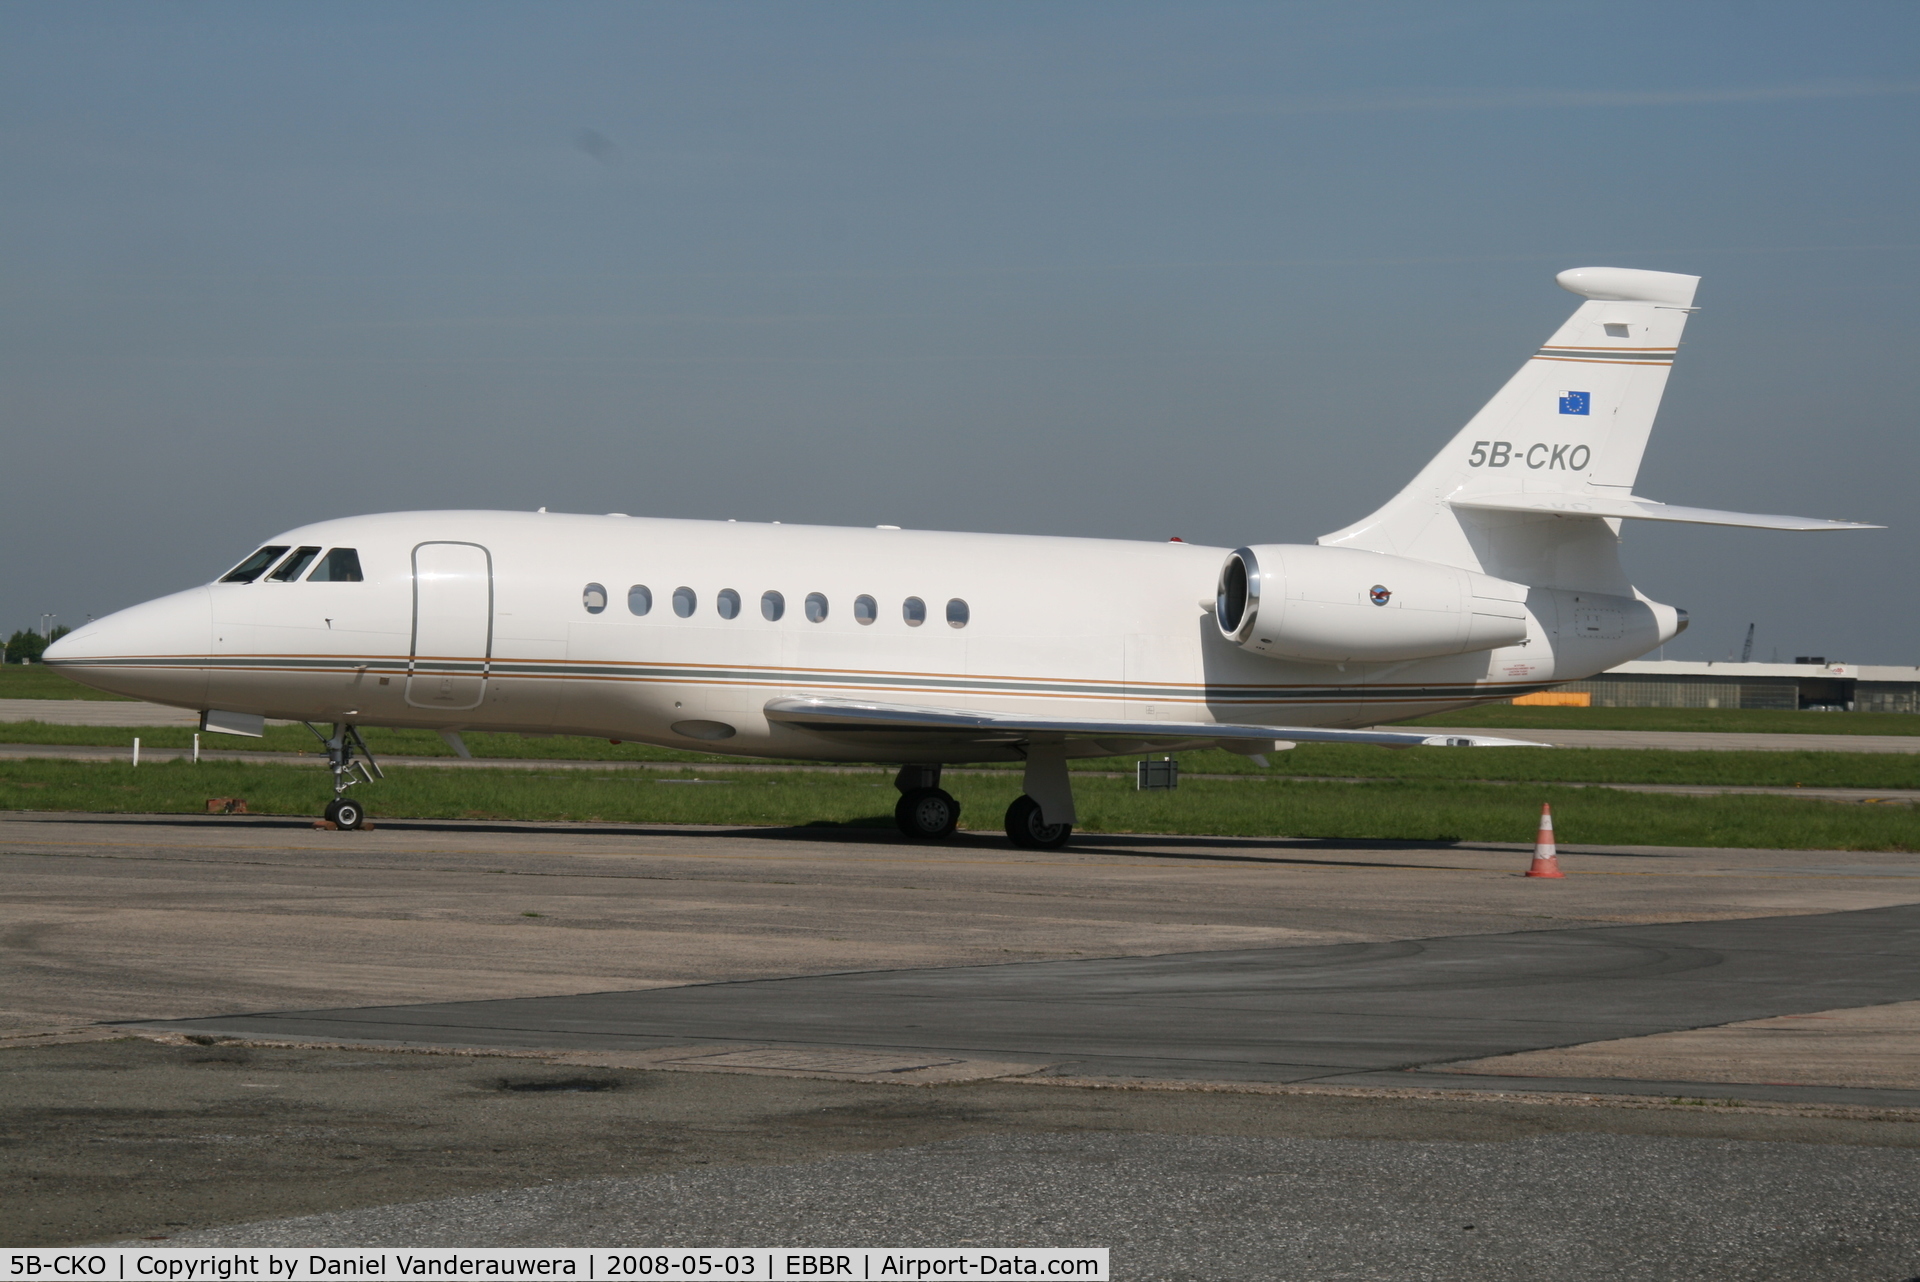 5B-CKO, 2006 Dassault Falcon 2000EX C/N 96, parked on General Aviation apron (Abelag)